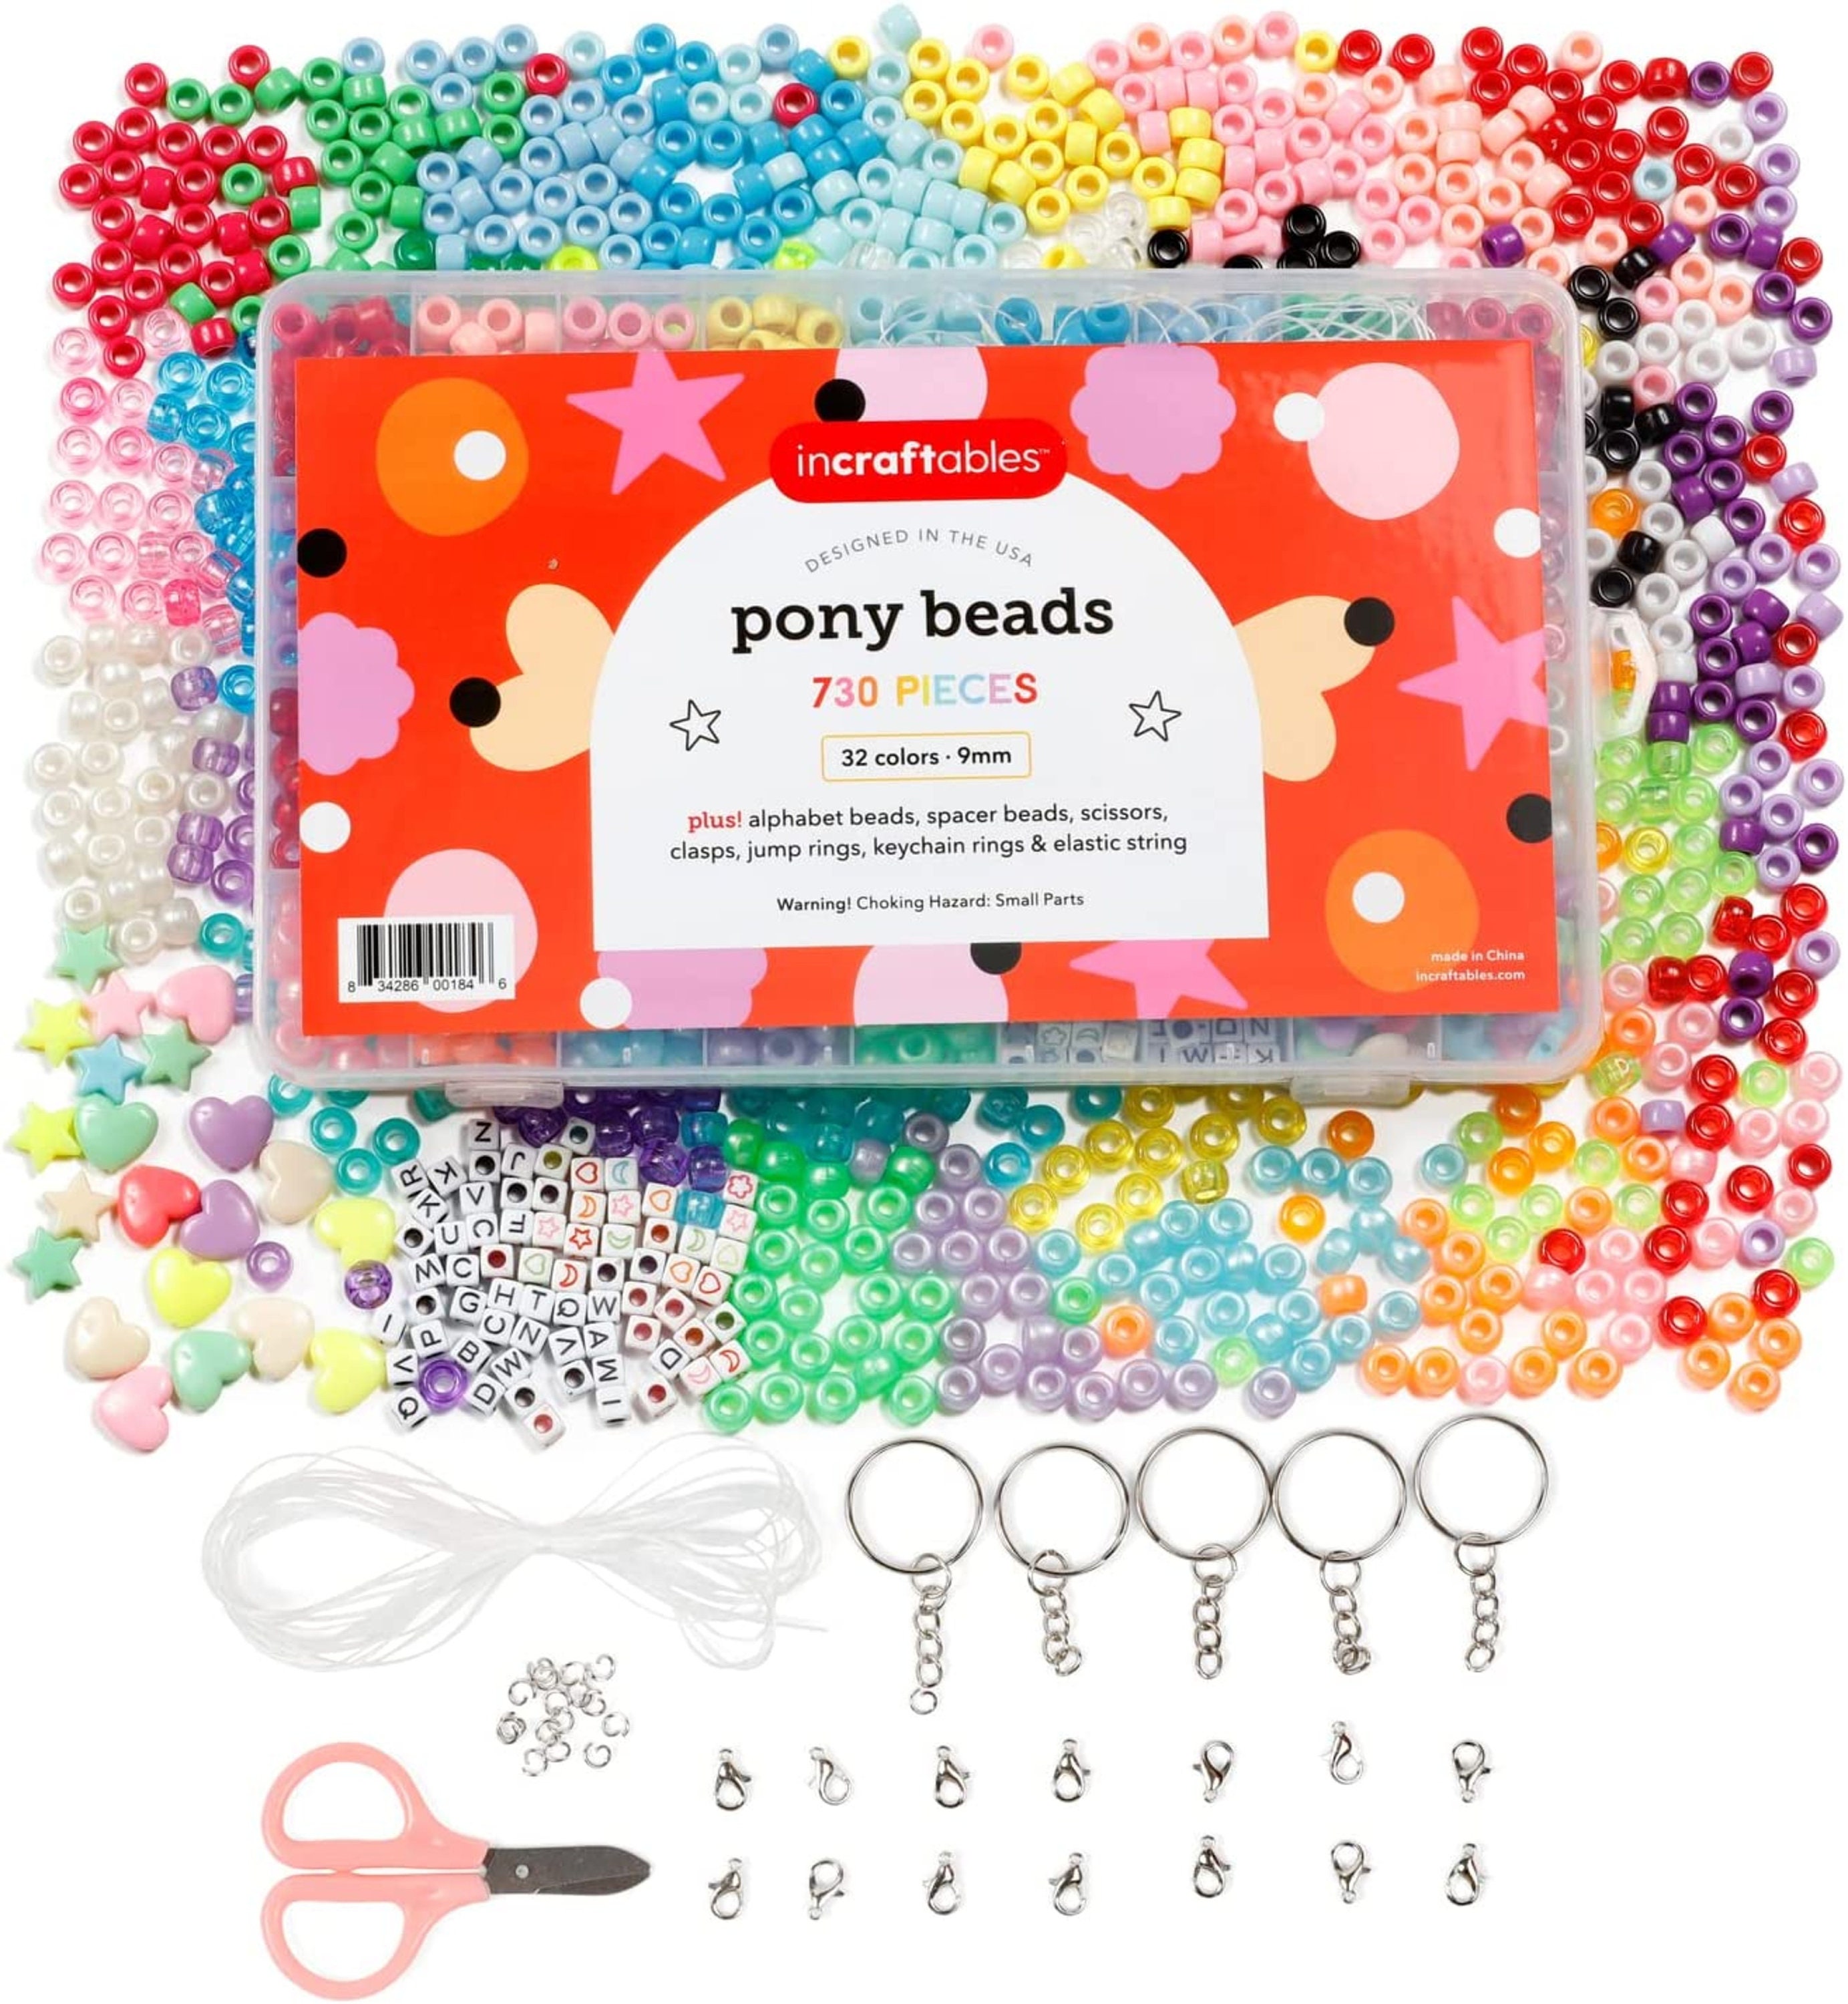 9mm Opague Red Pony Beads Bulk 1,000 Pieces